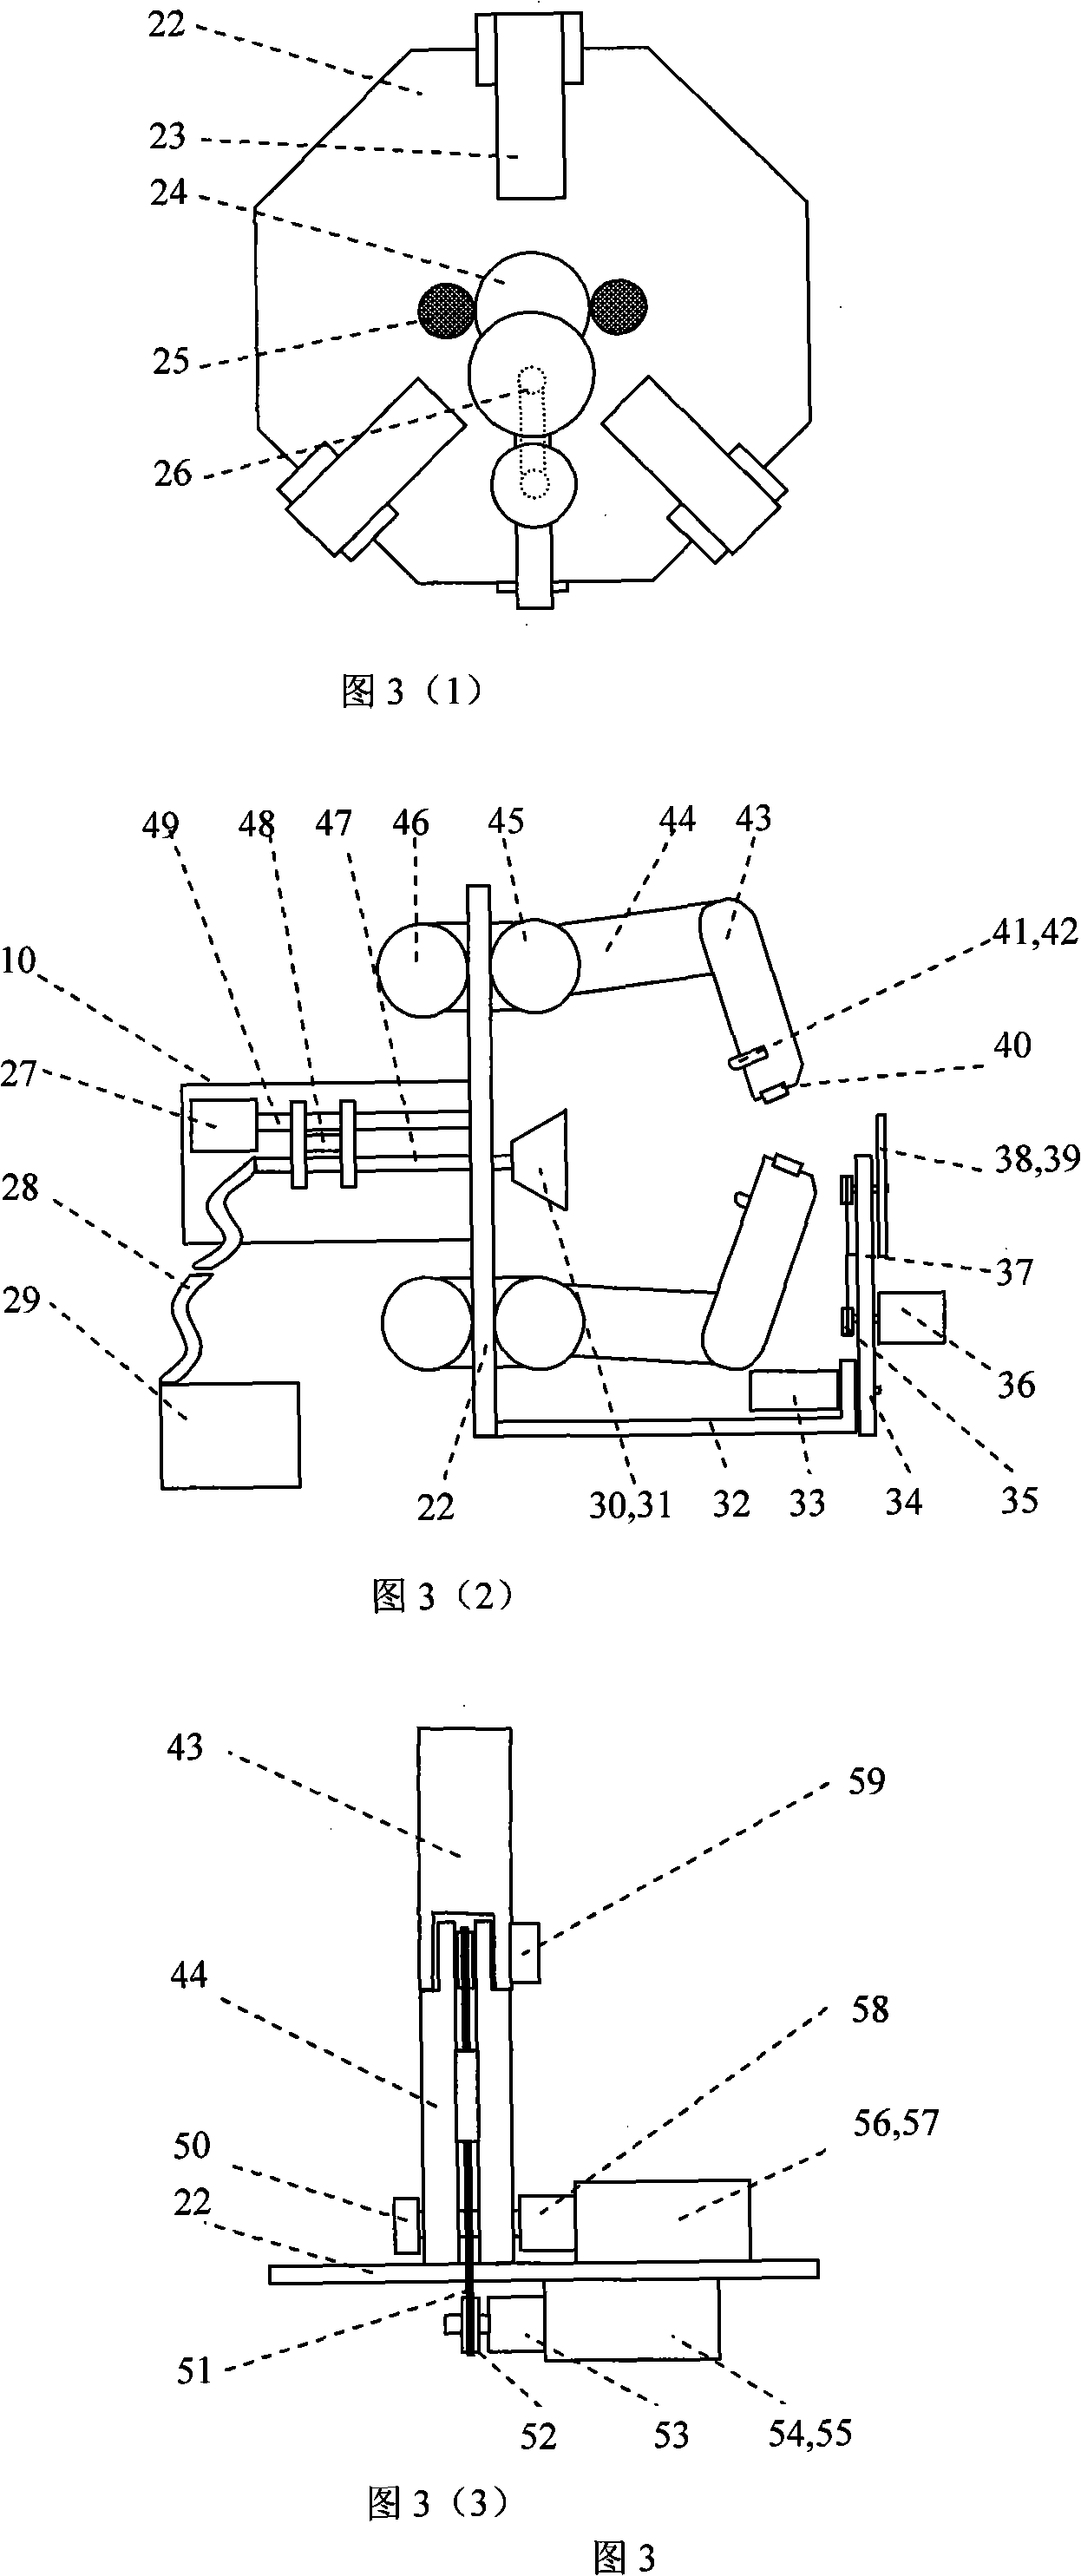 Apparatus and method for flexible pick of orange picking robot